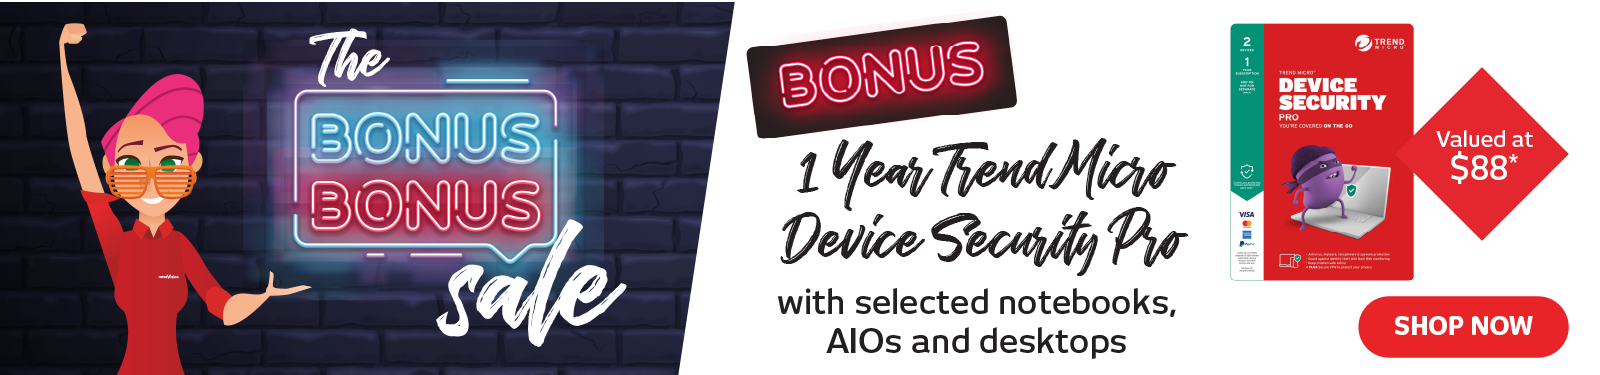 Bonus 1 Year Trend Micro Device Security Pro at Retravision